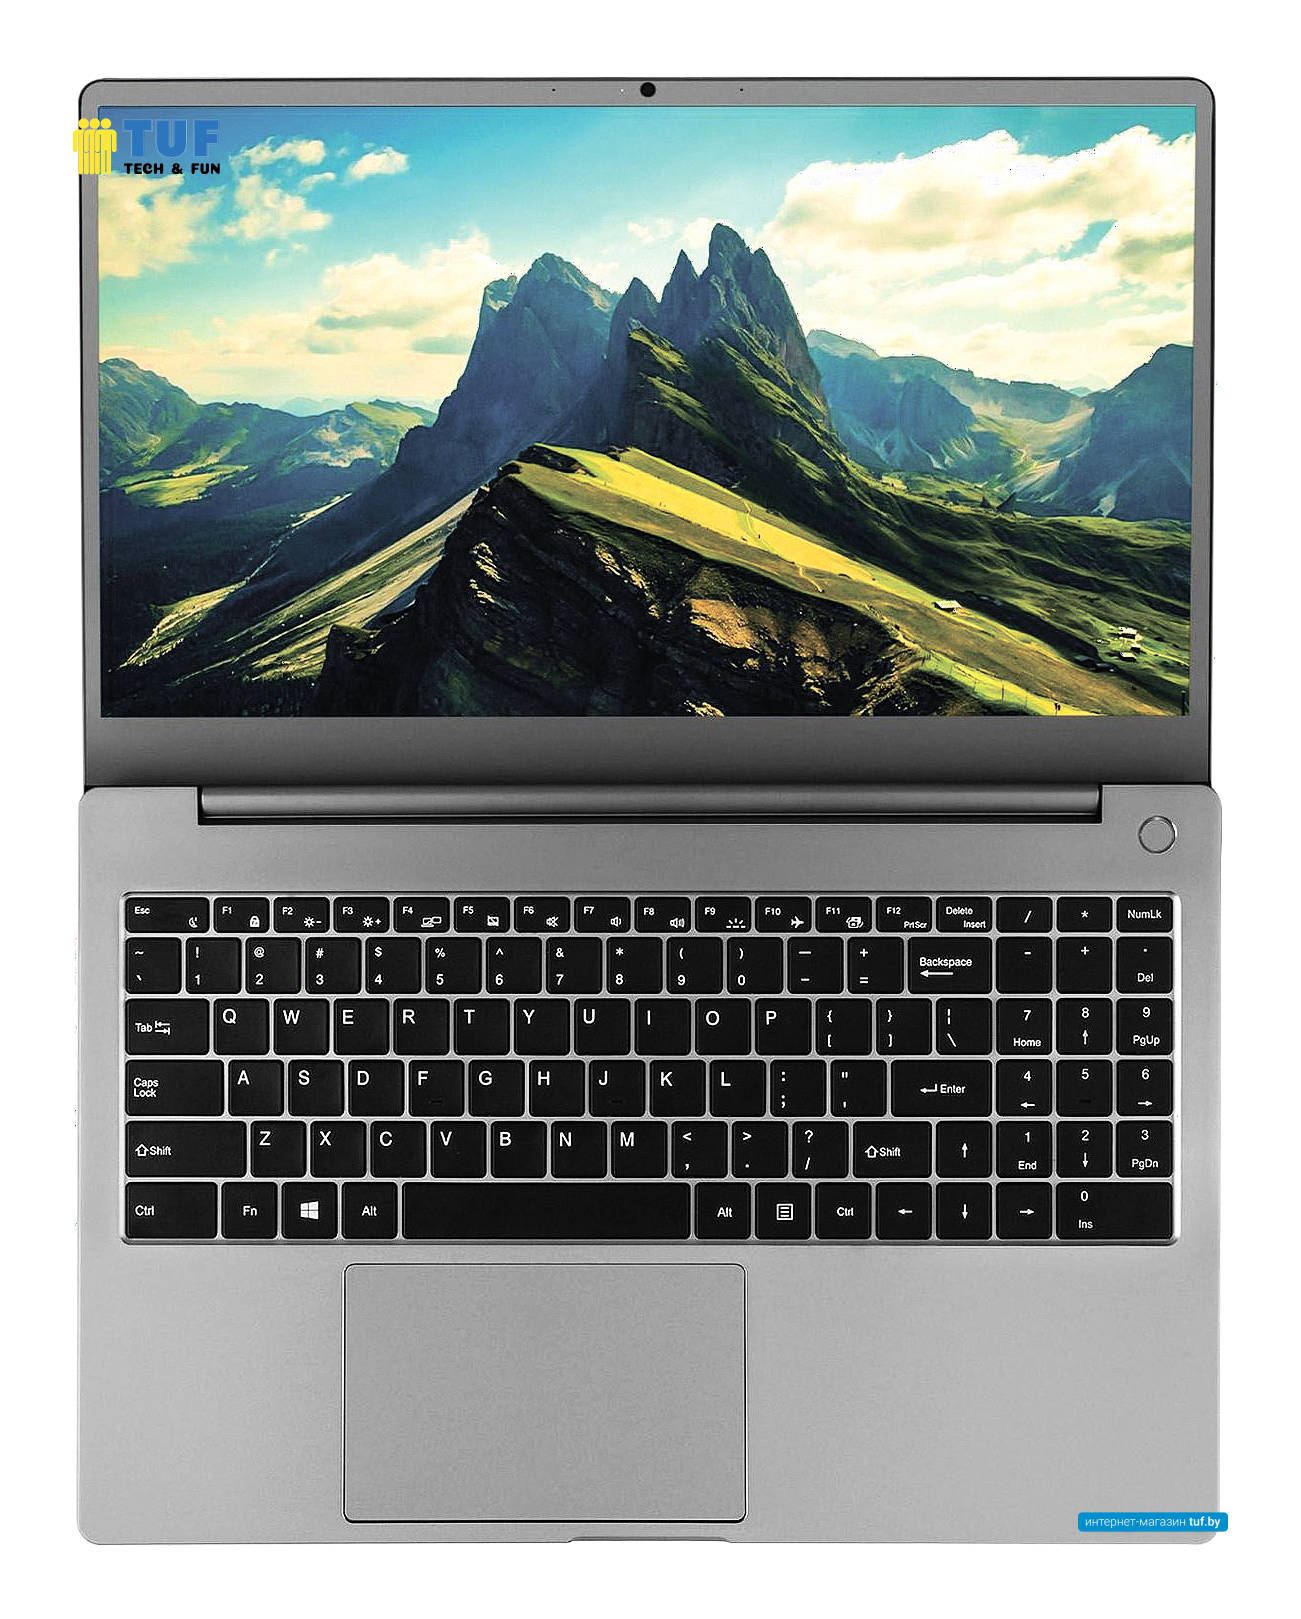 Ноутбук Rombica myBook Zenith PCLT-0022